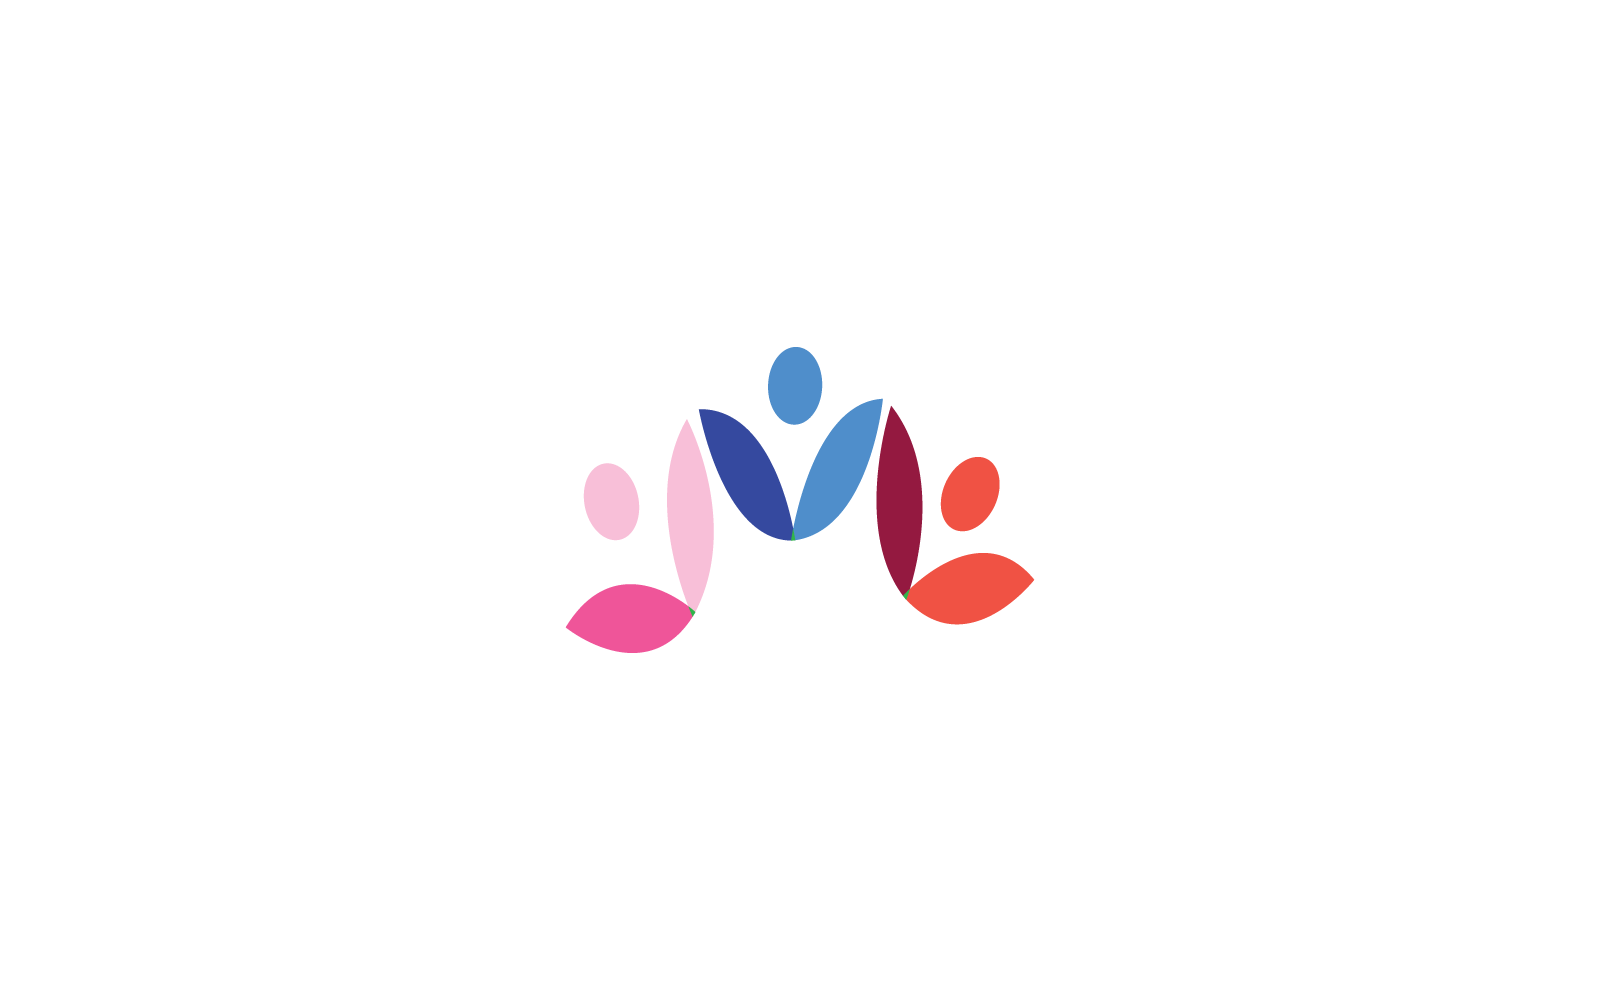 Шаблон иллюстрации логотипа Community Care плоский дизайн